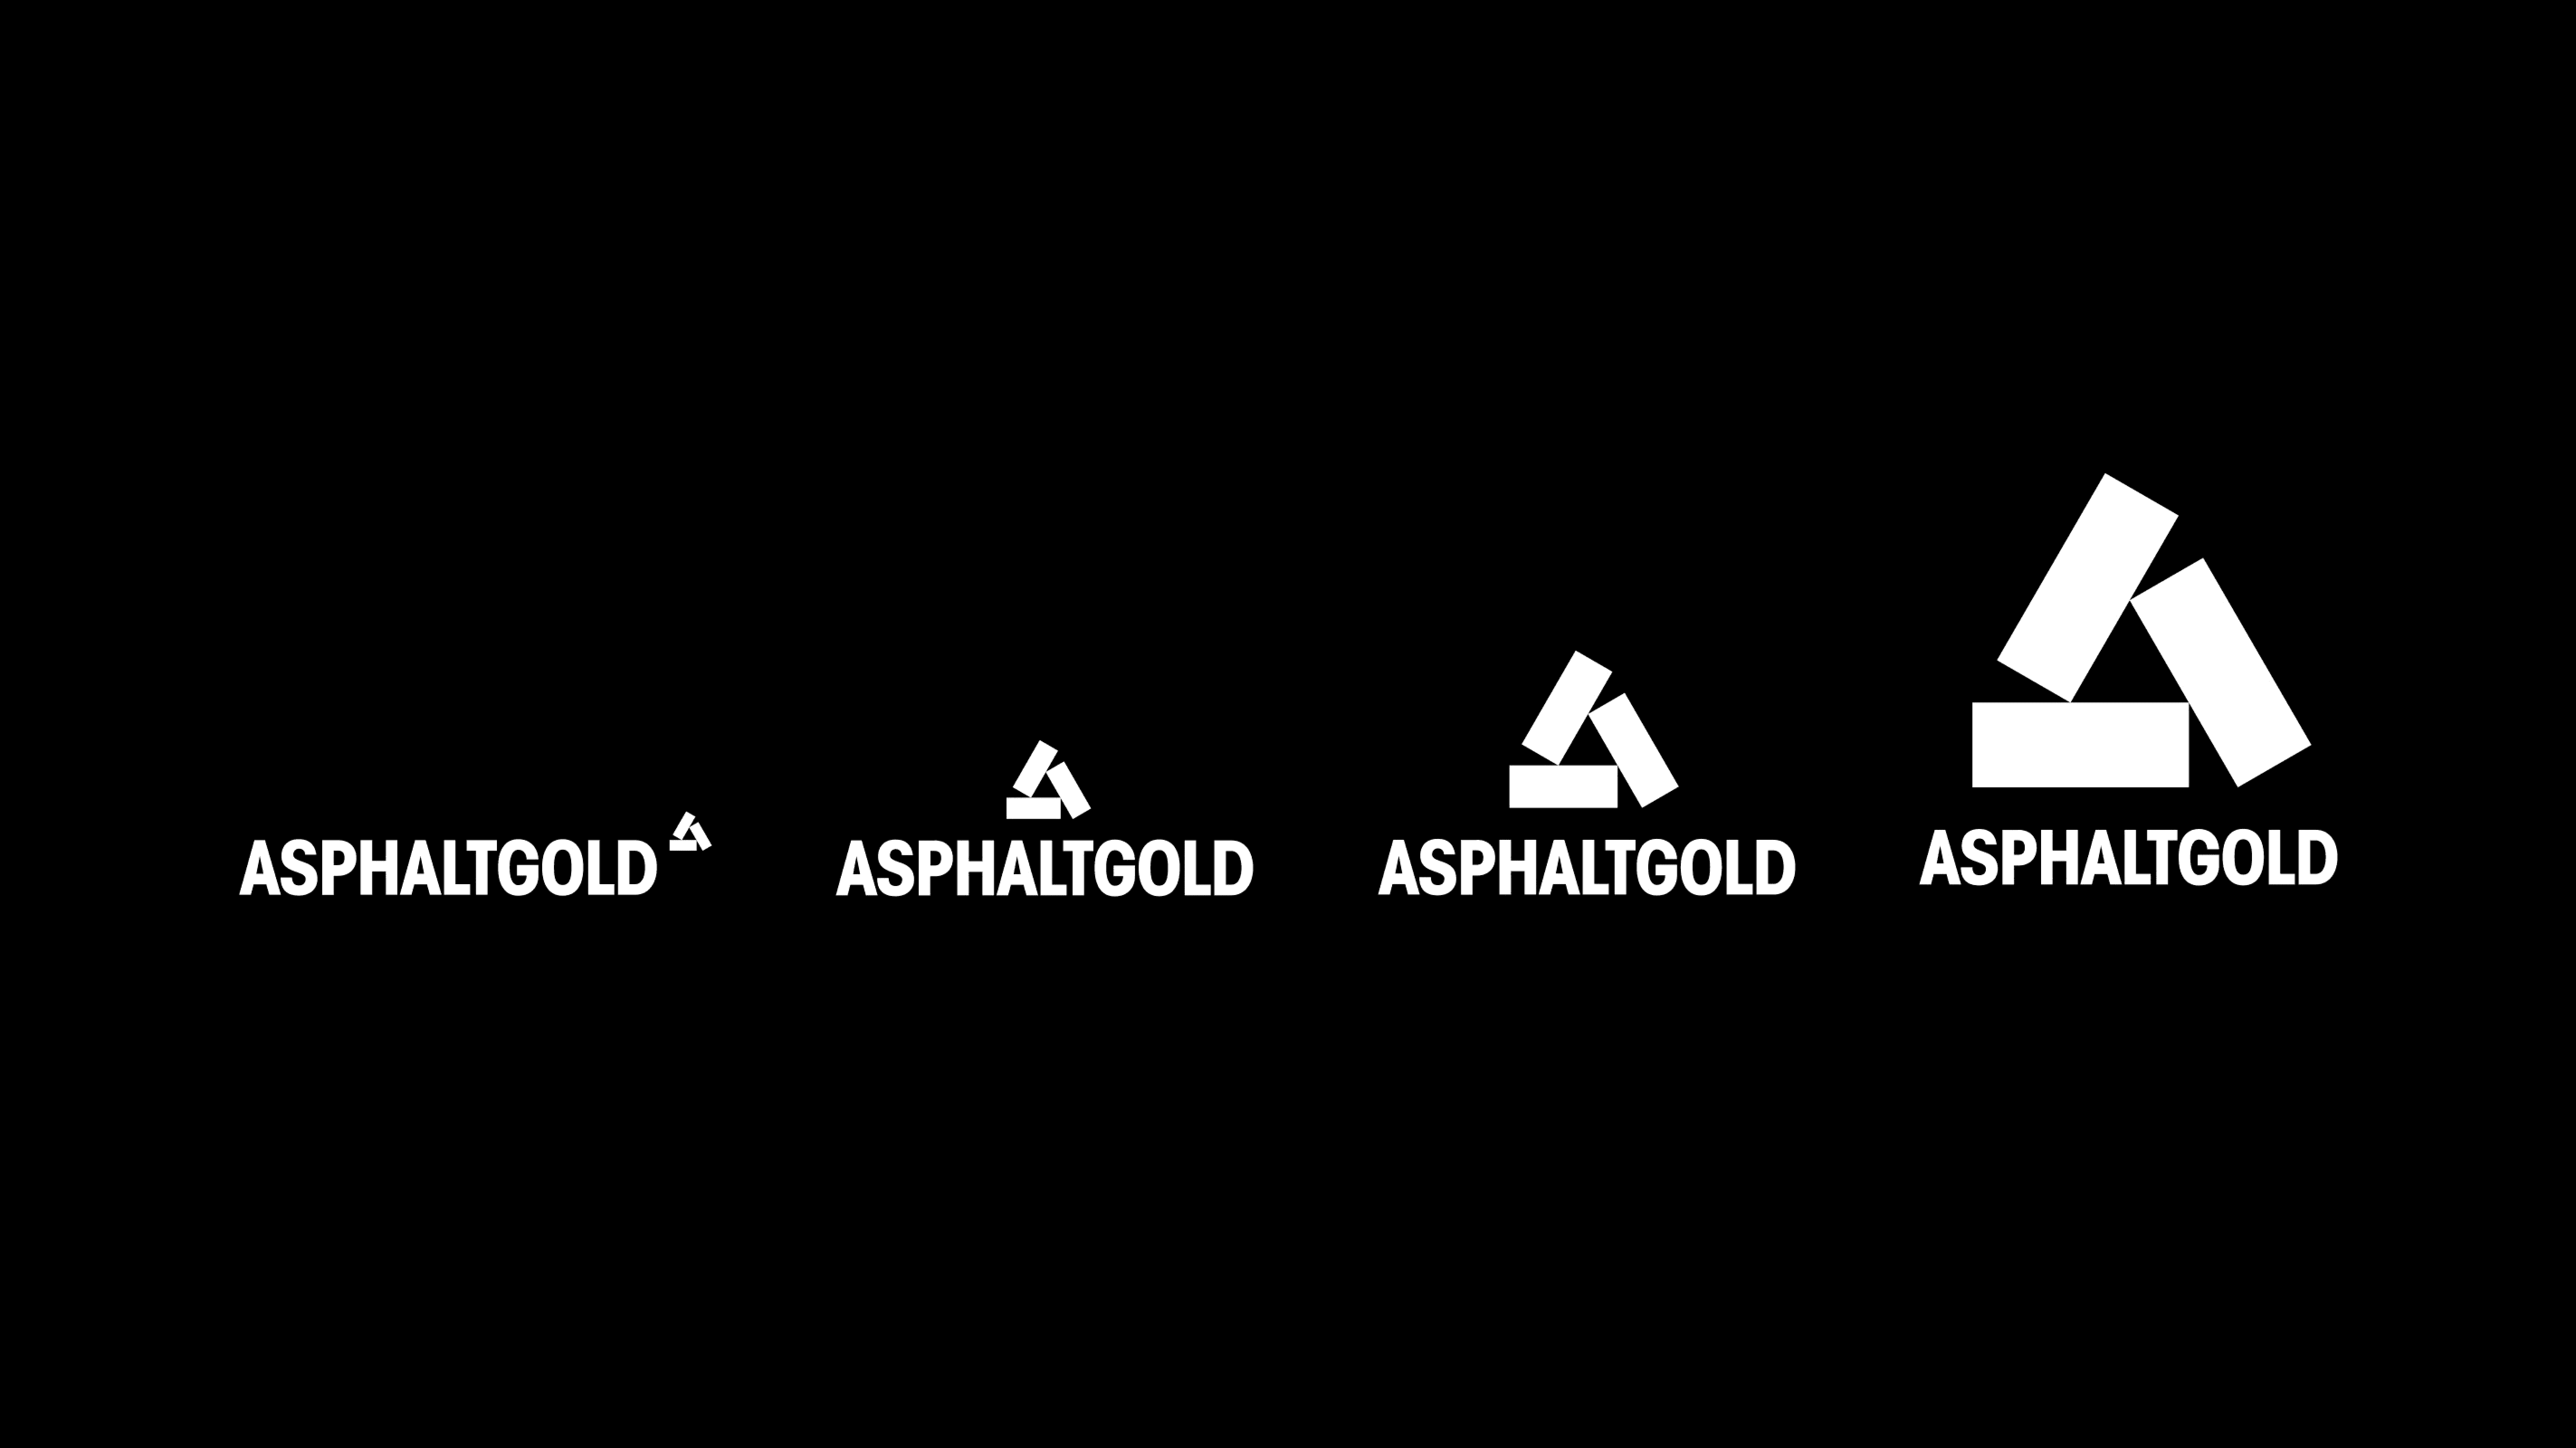 Different Asphaltgold logo variations